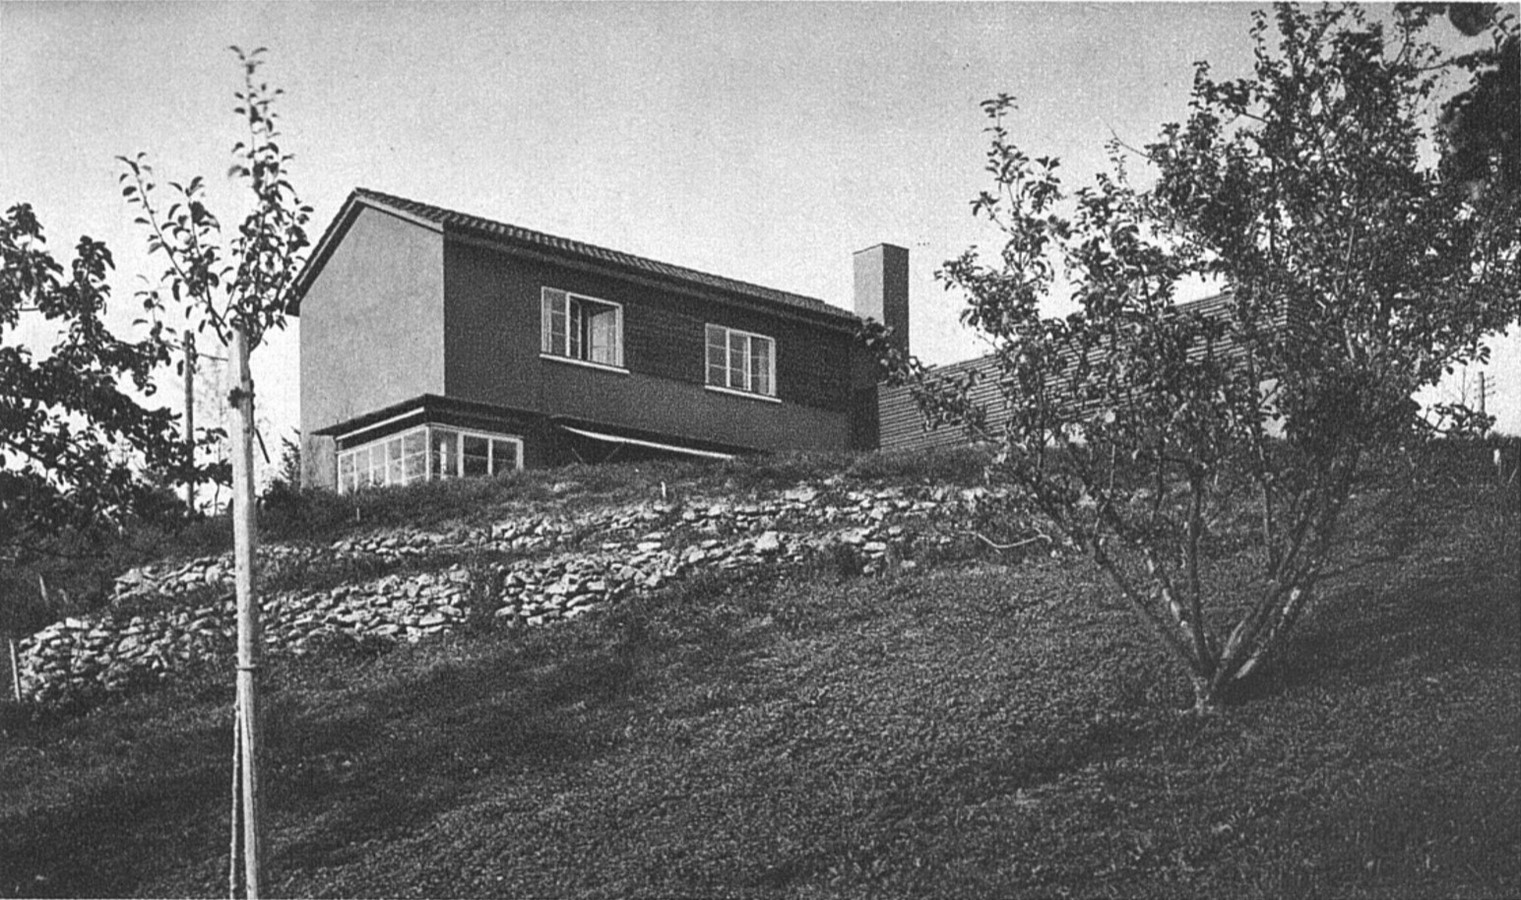 Country house in Erlenbach - Sheet2